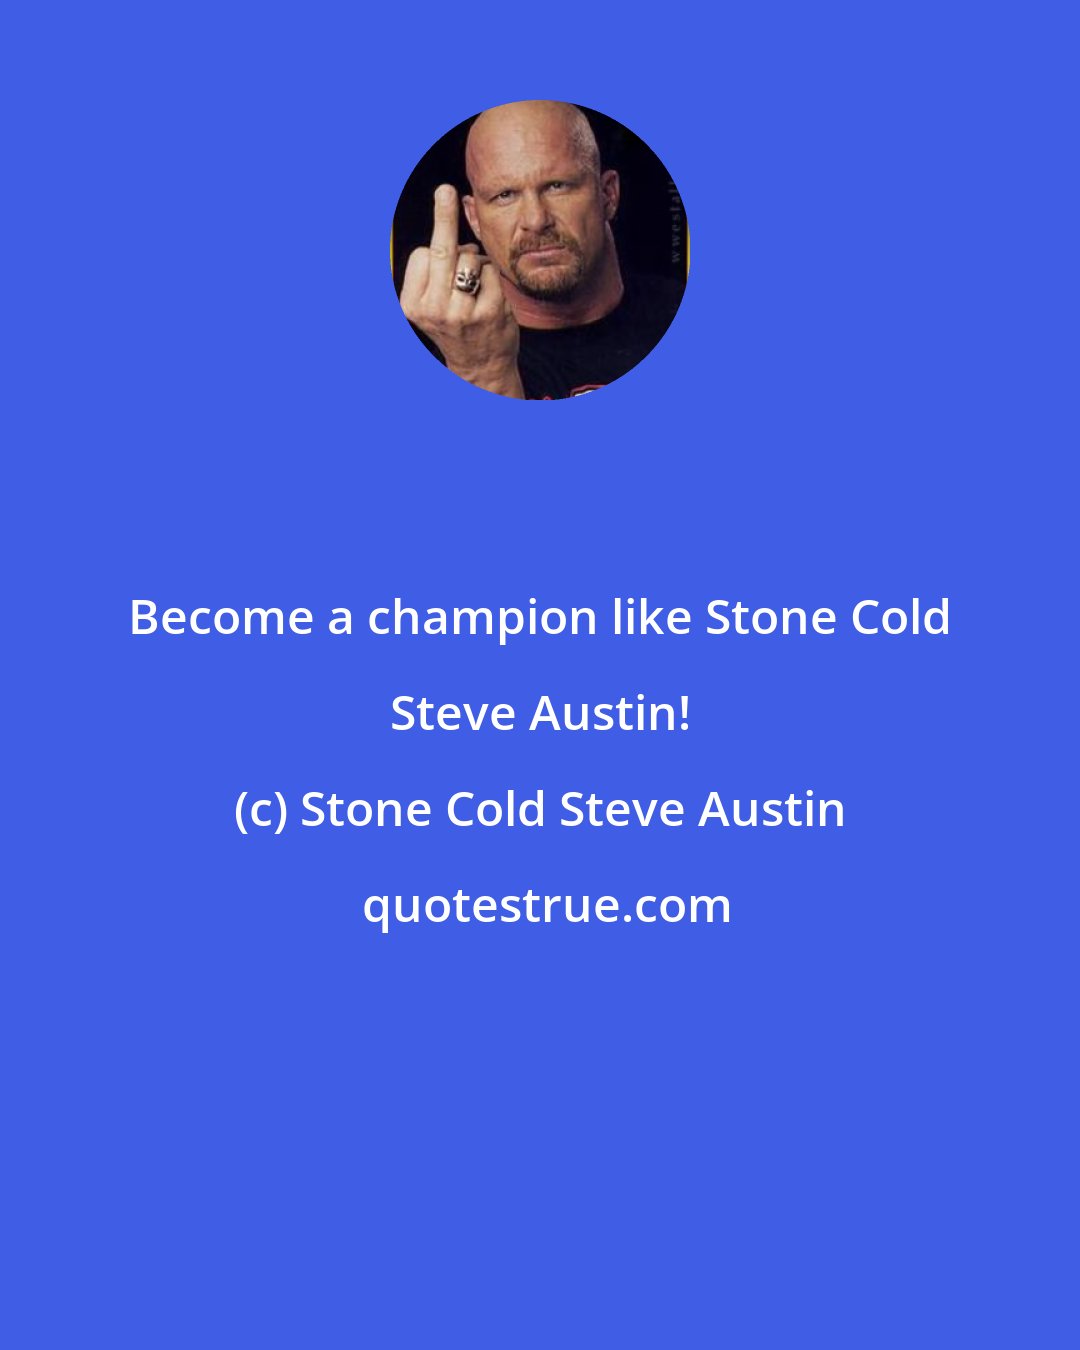 Stone Cold Steve Austin: Become a champion like Stone Cold Steve Austin!